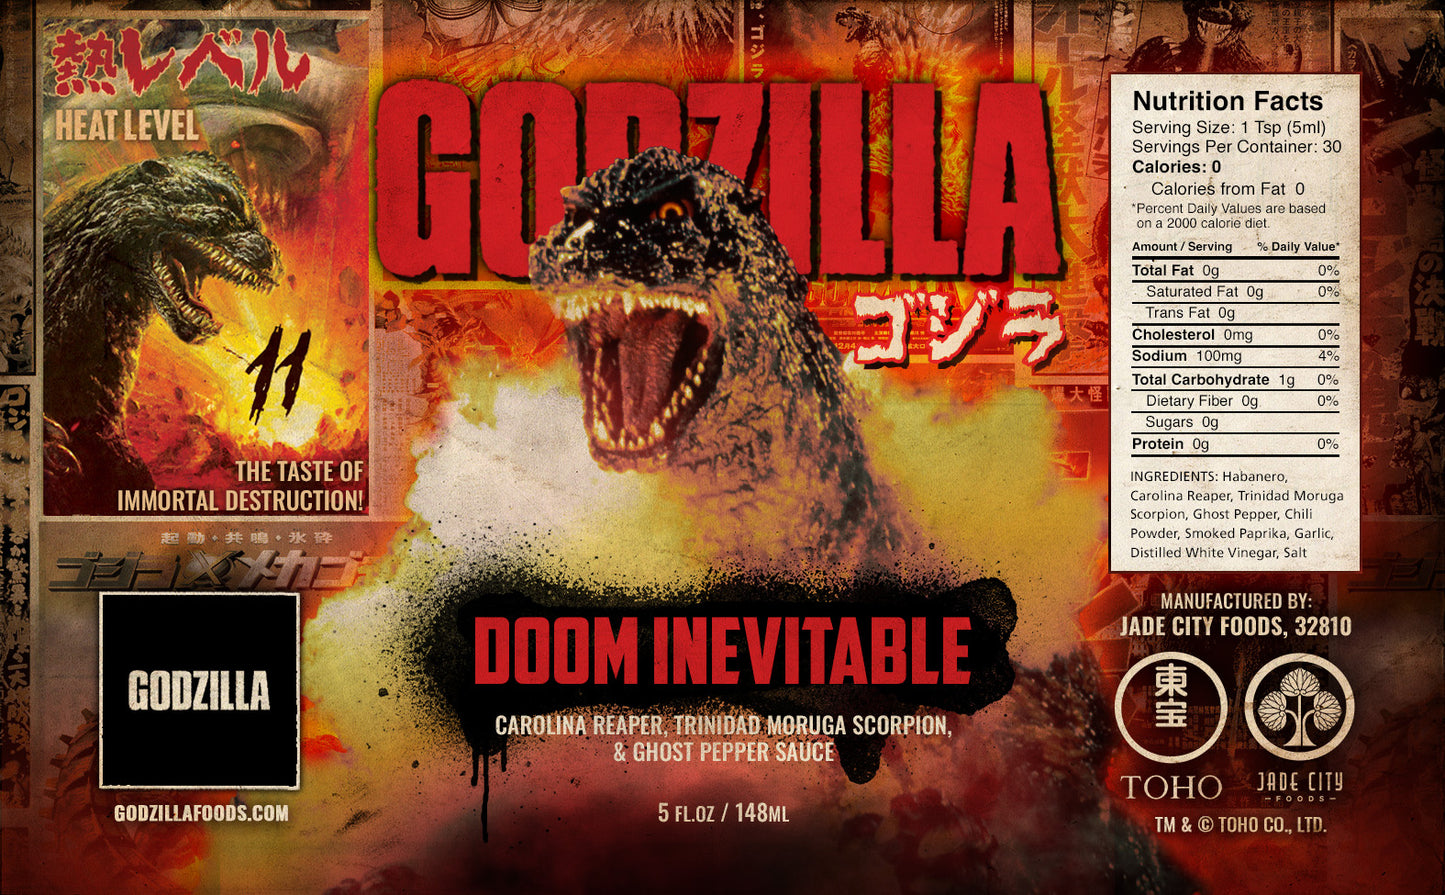 Godzilla's Doom Inevitable : Carolina Reaper, Trinidad Maruga Scorpion, & Ghost Pepper